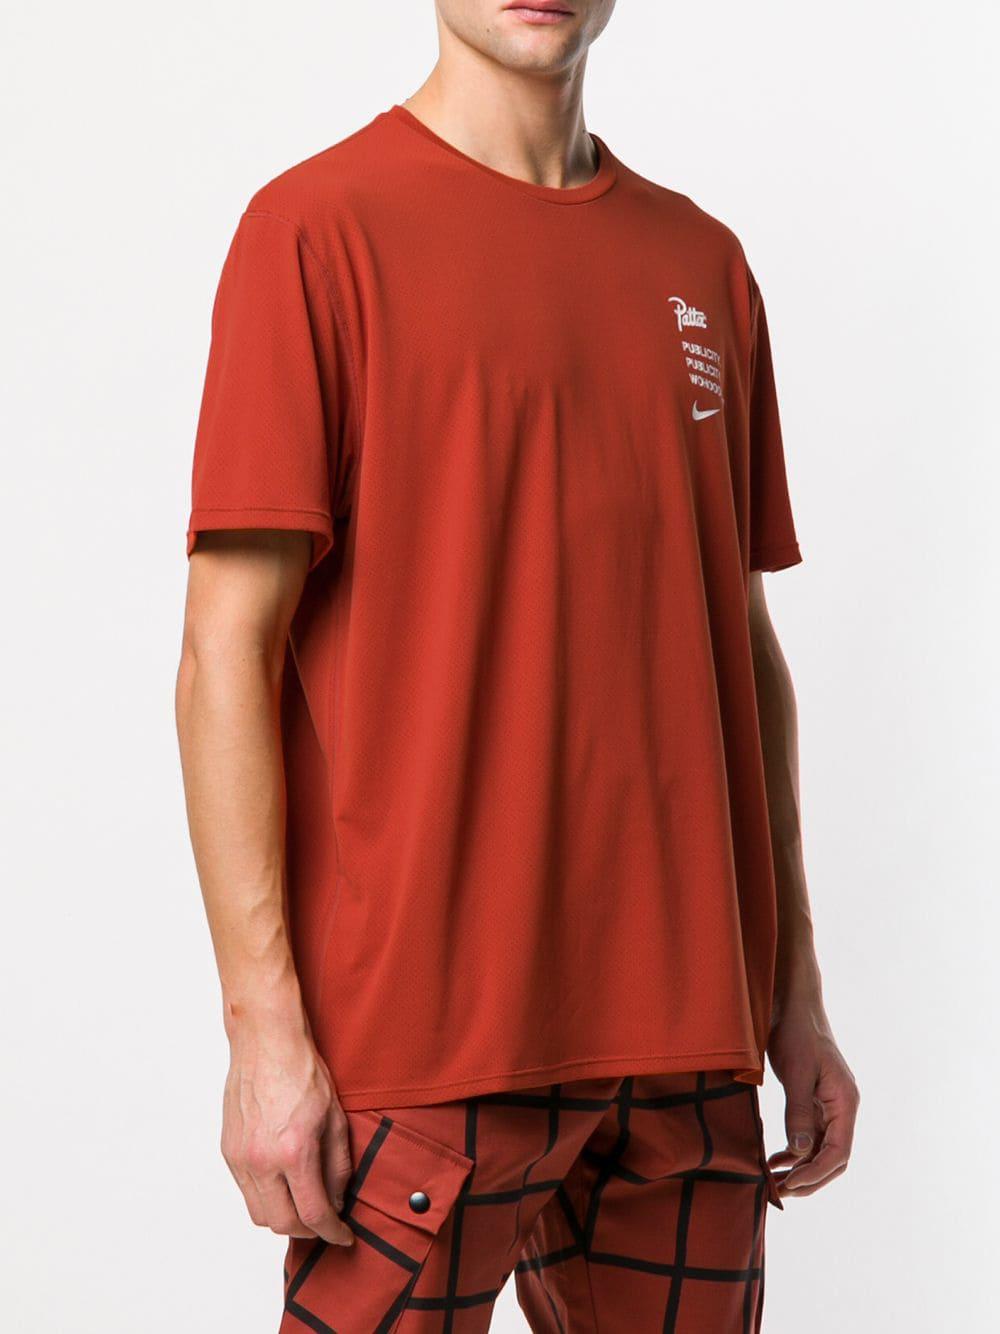 Nike Lab X Patta T-shirt in Orange for Men | Lyst